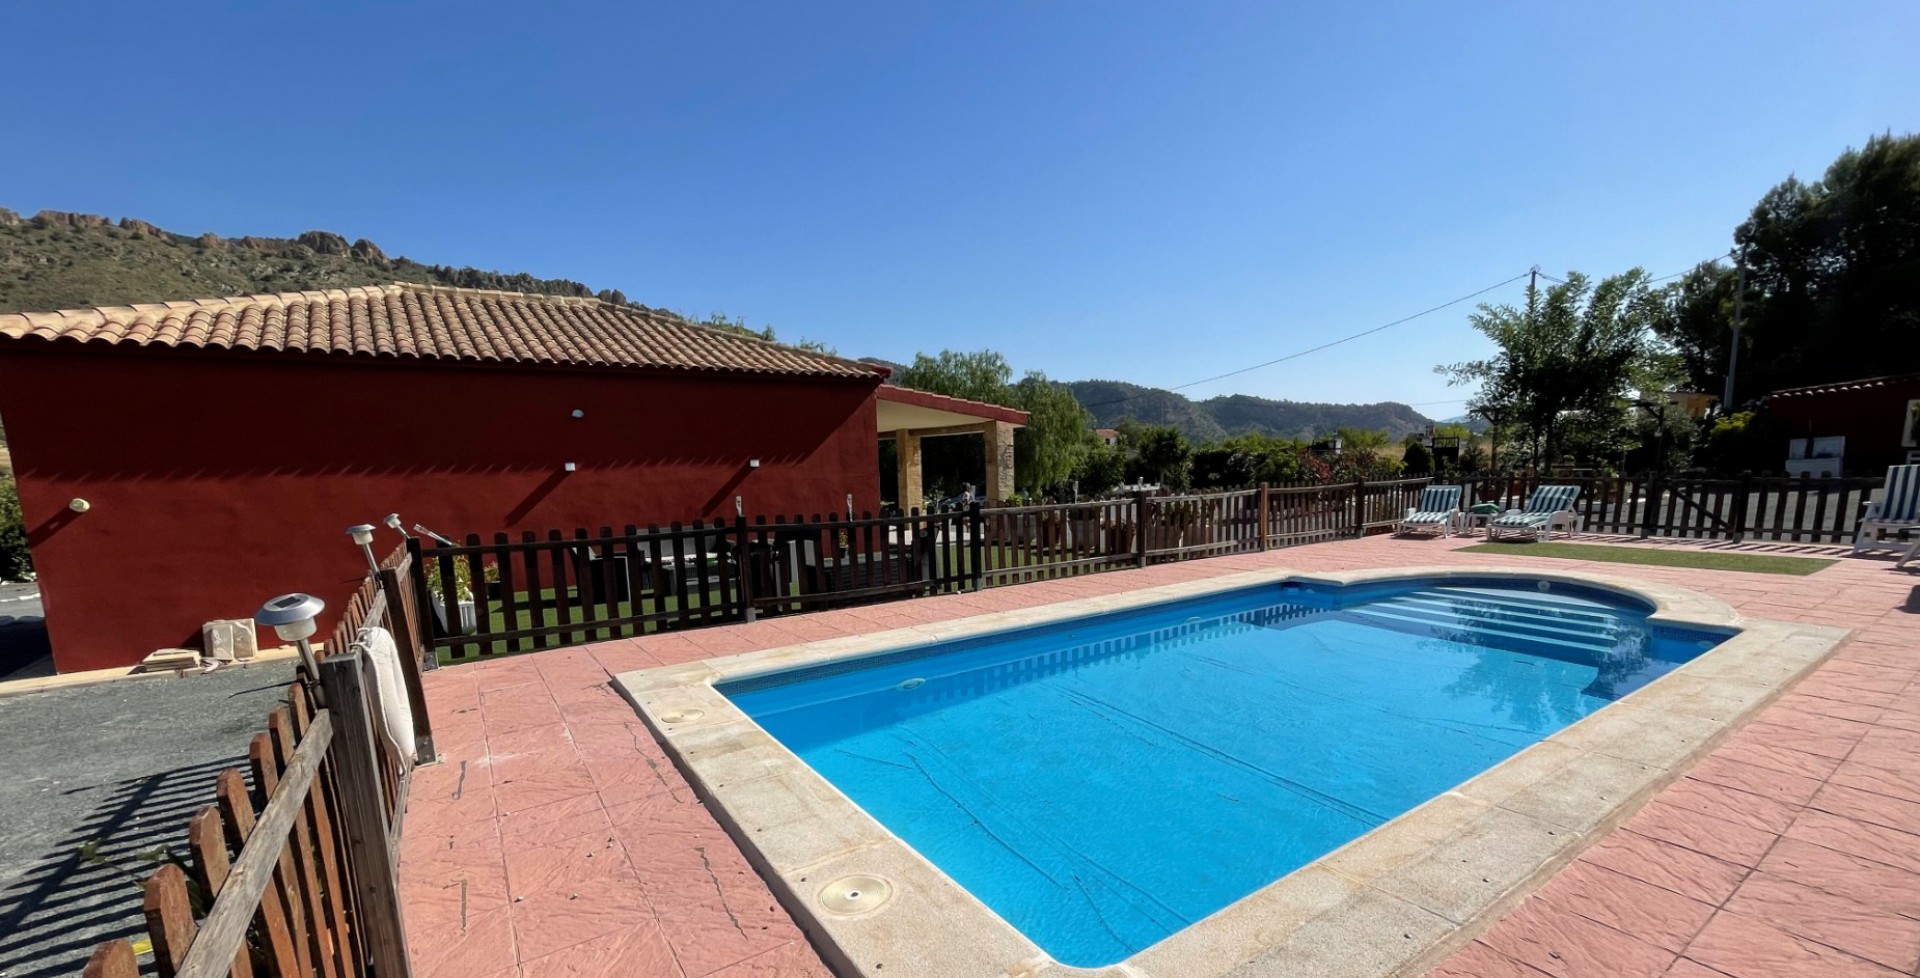 Amazing villa with great swimming pool, Ricote, Murcia, Spain